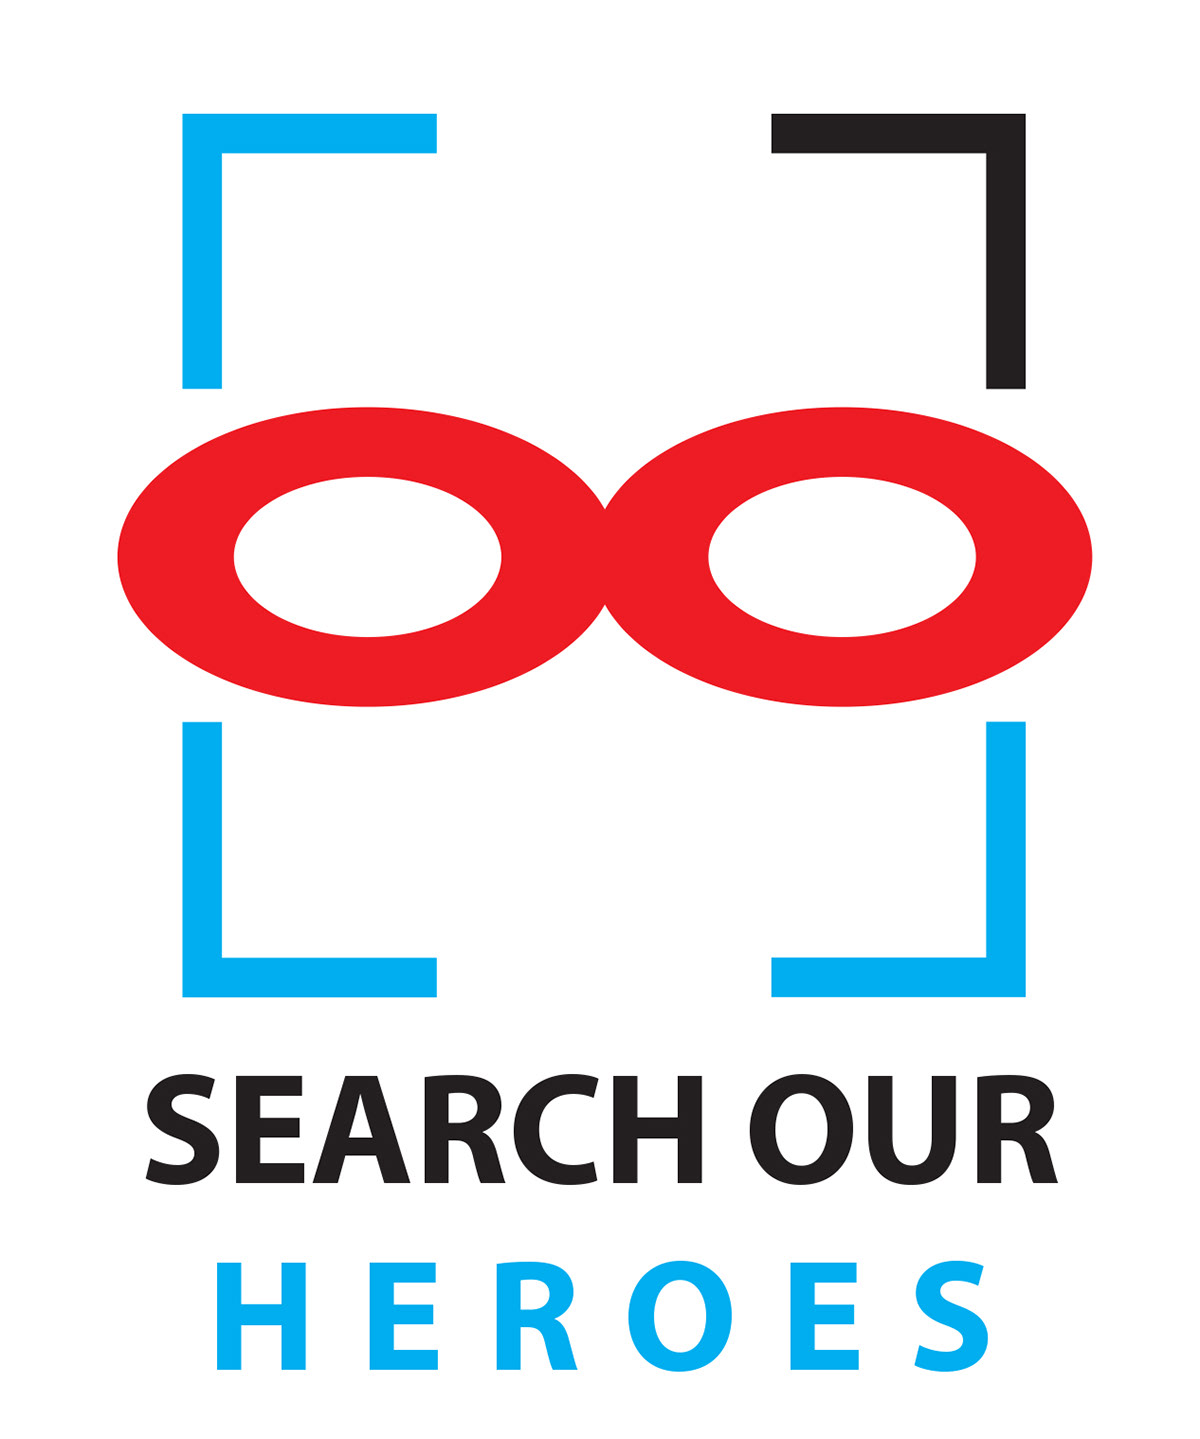 Competition Hero heroes eger logo Logotype Myriad Pro